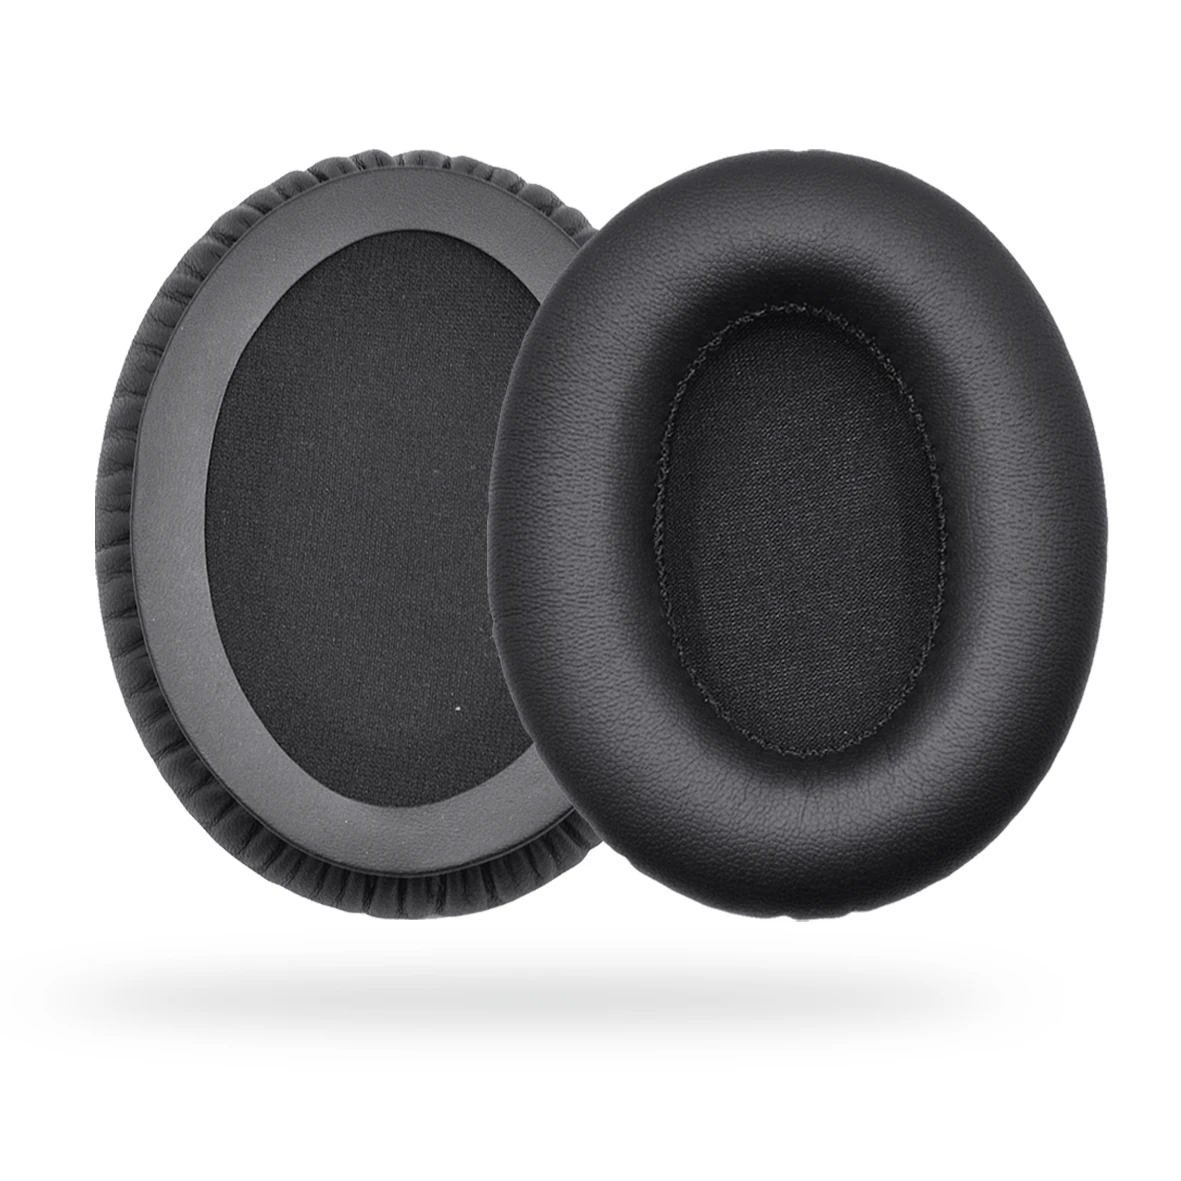 2 x Ear Pads Cushion Cover for Mpow 059 071 H1 H4 H5 H8 A8 Bluetooth Headphones 